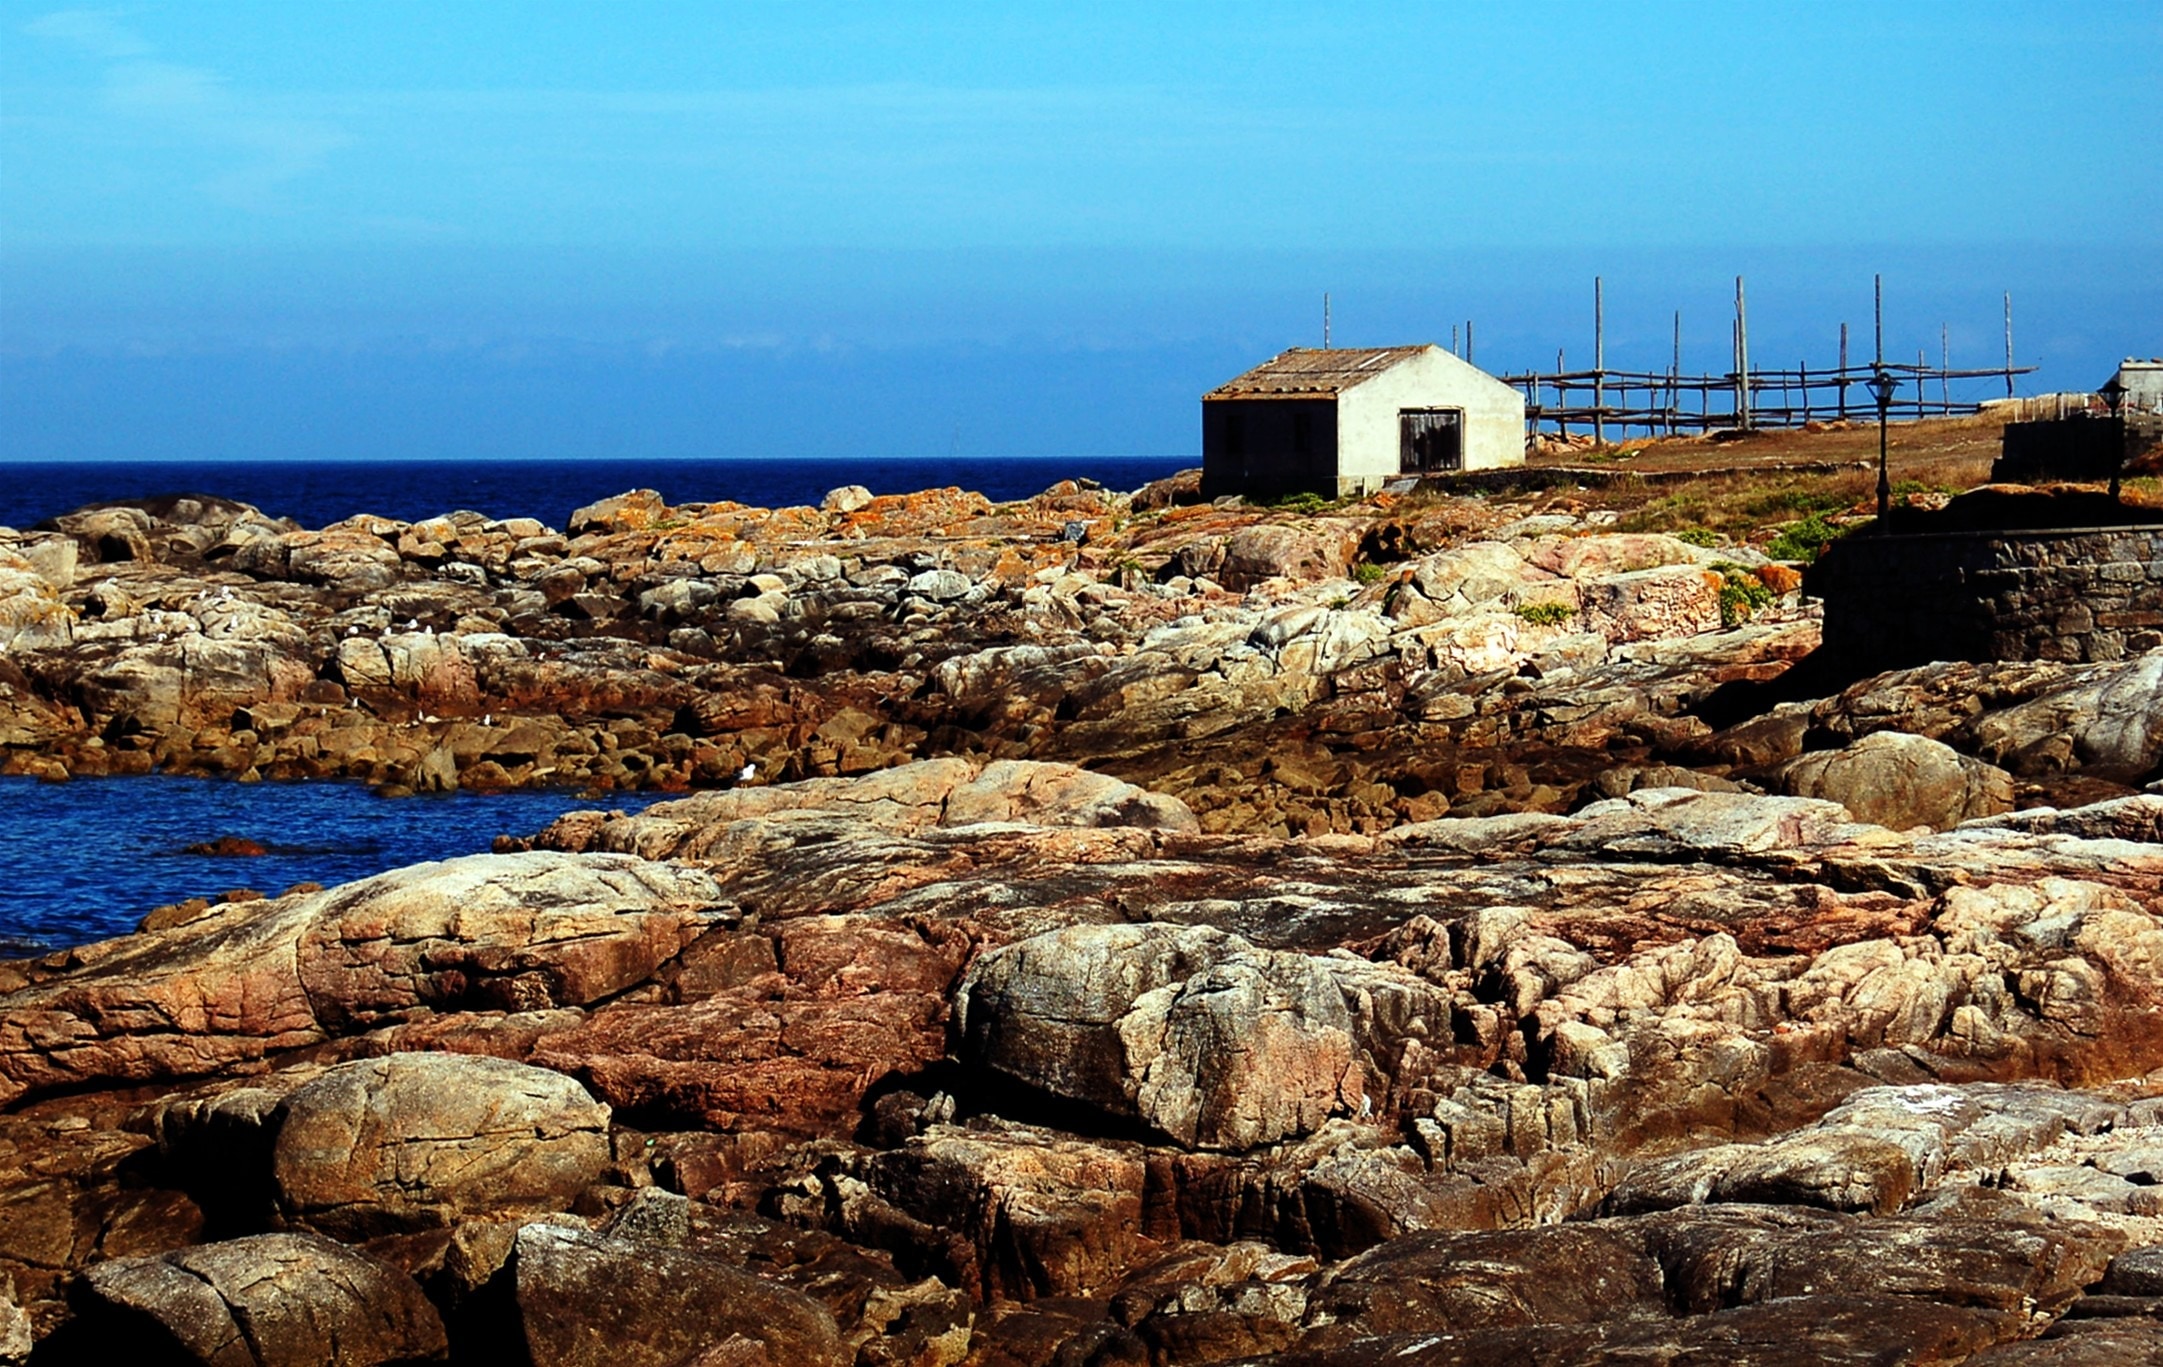 Galicia, Muxia, Rocks, Sea, Cliff, built structure, building exterior